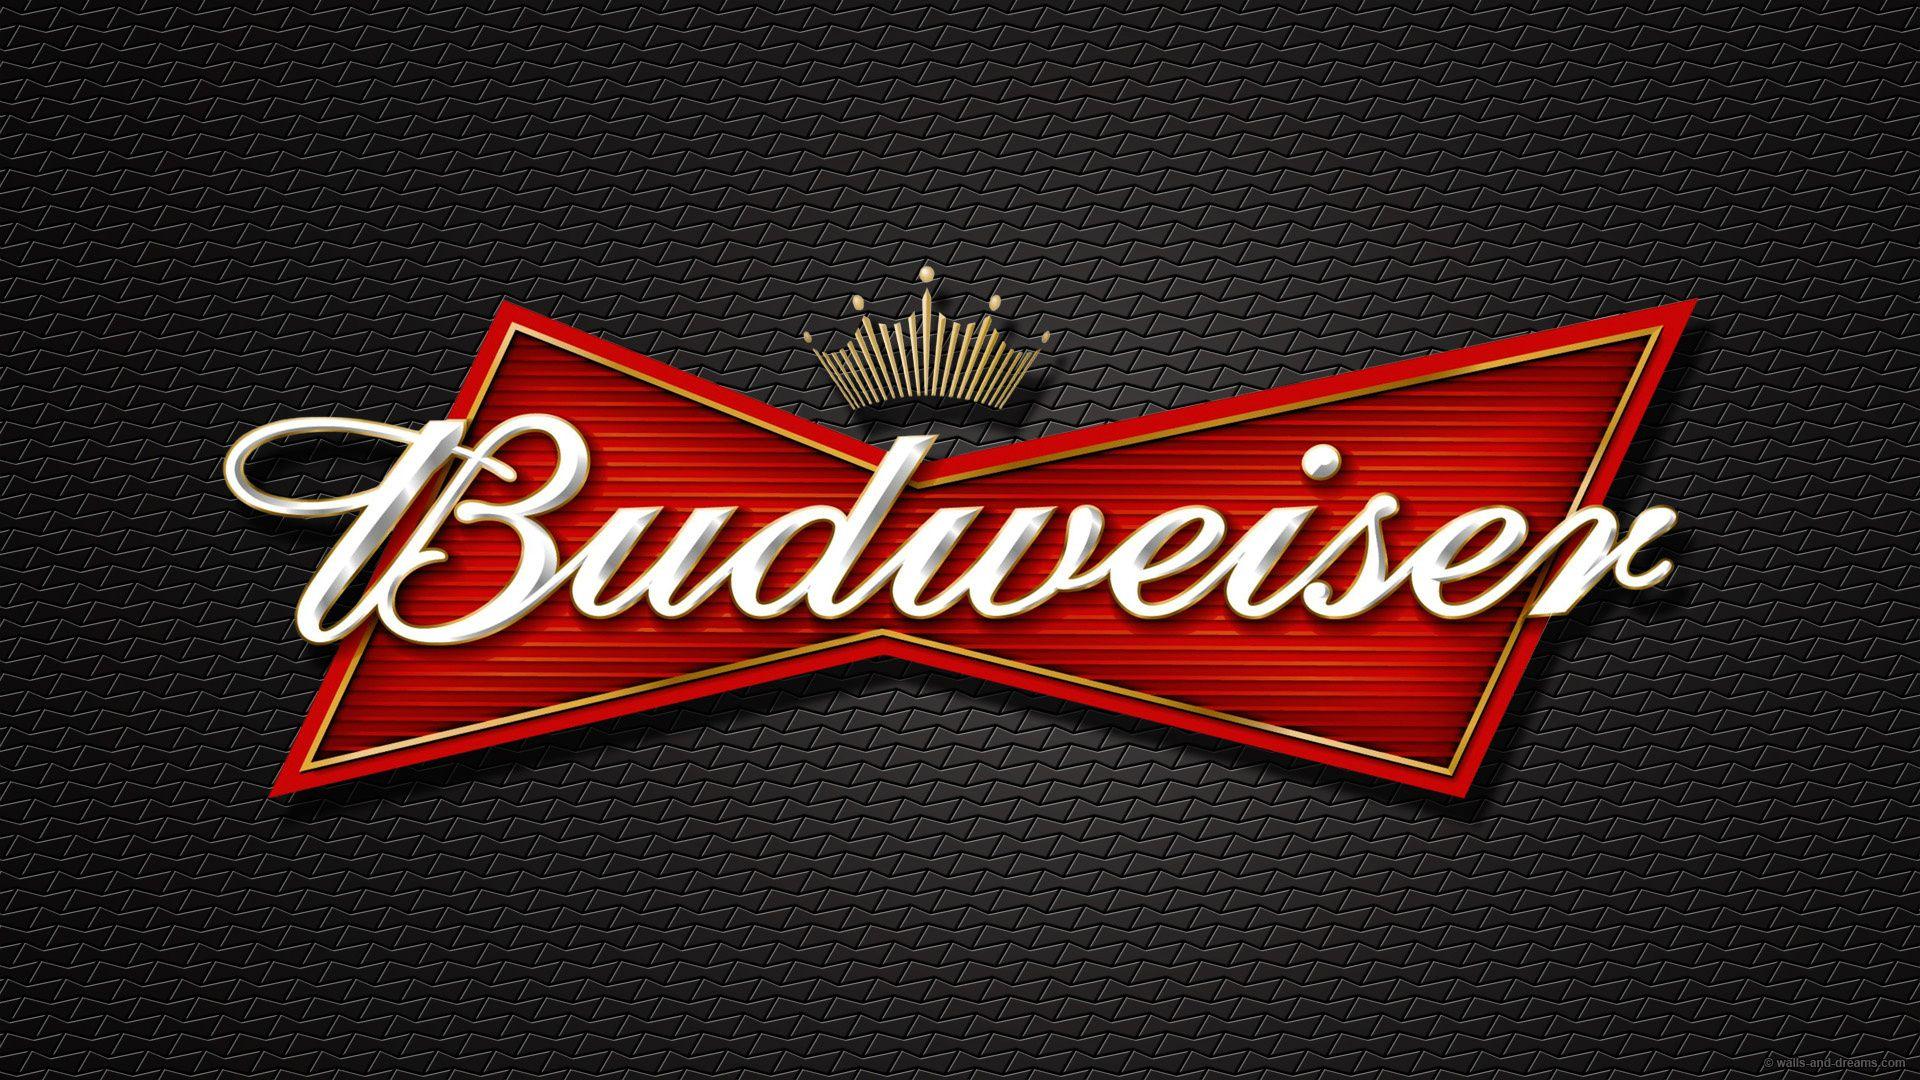 Brands, Budweiser, Budweiser Background, Drinking